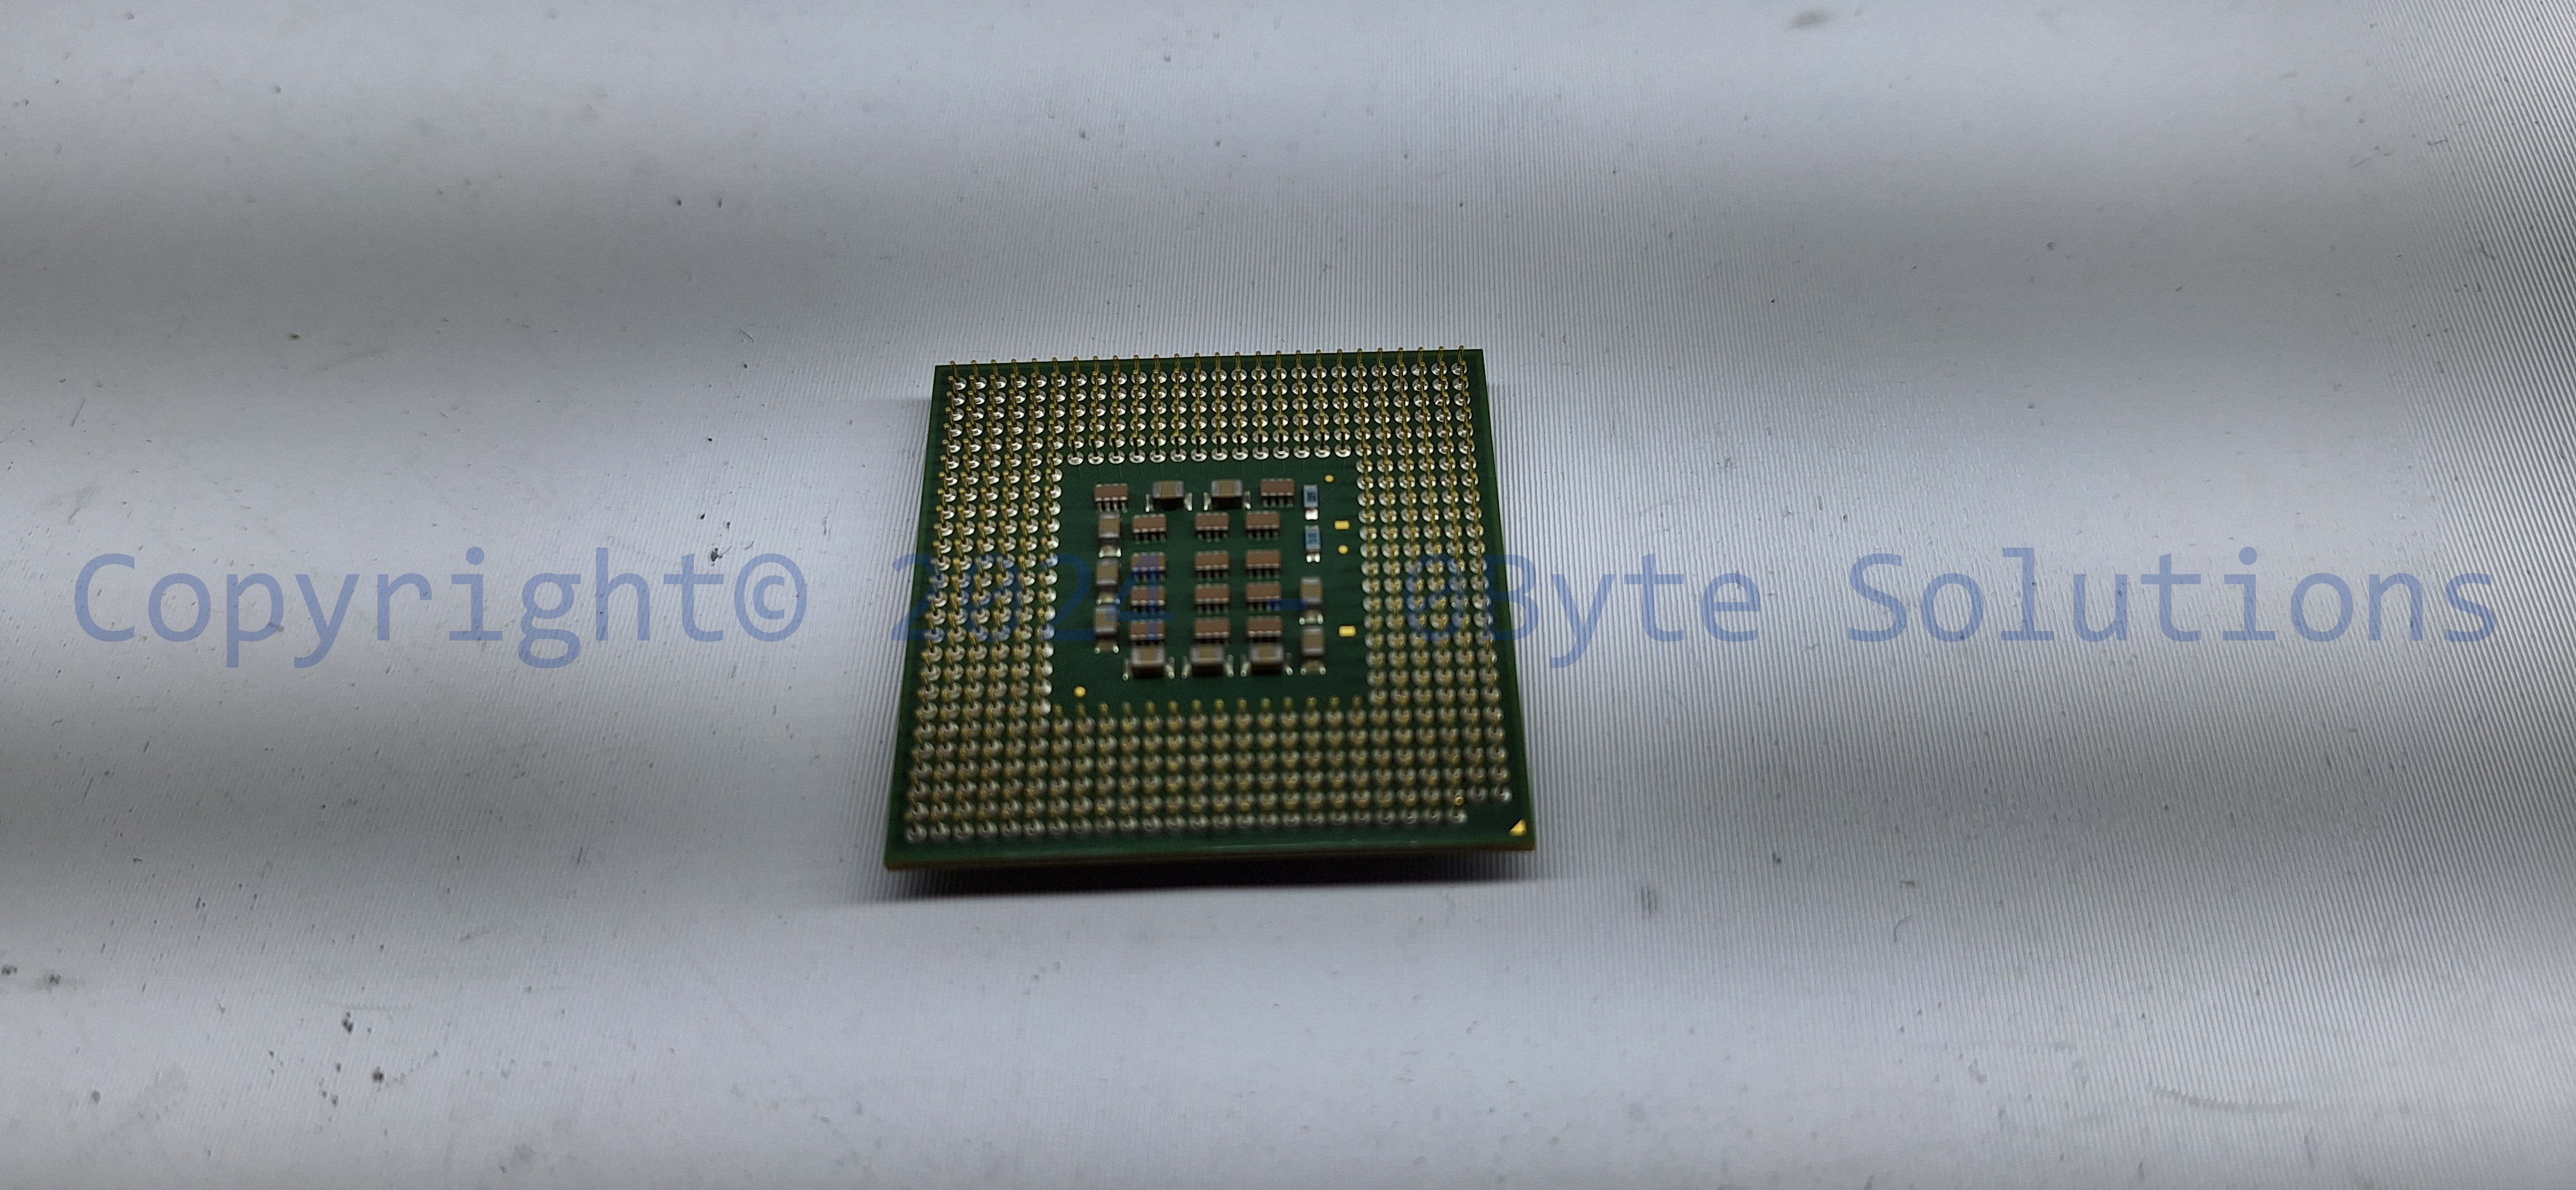 Intel® SL79K Pentium® 4 Processor 520/521 2.8GHz, 1MB L2 Cache Socket 478 CPU